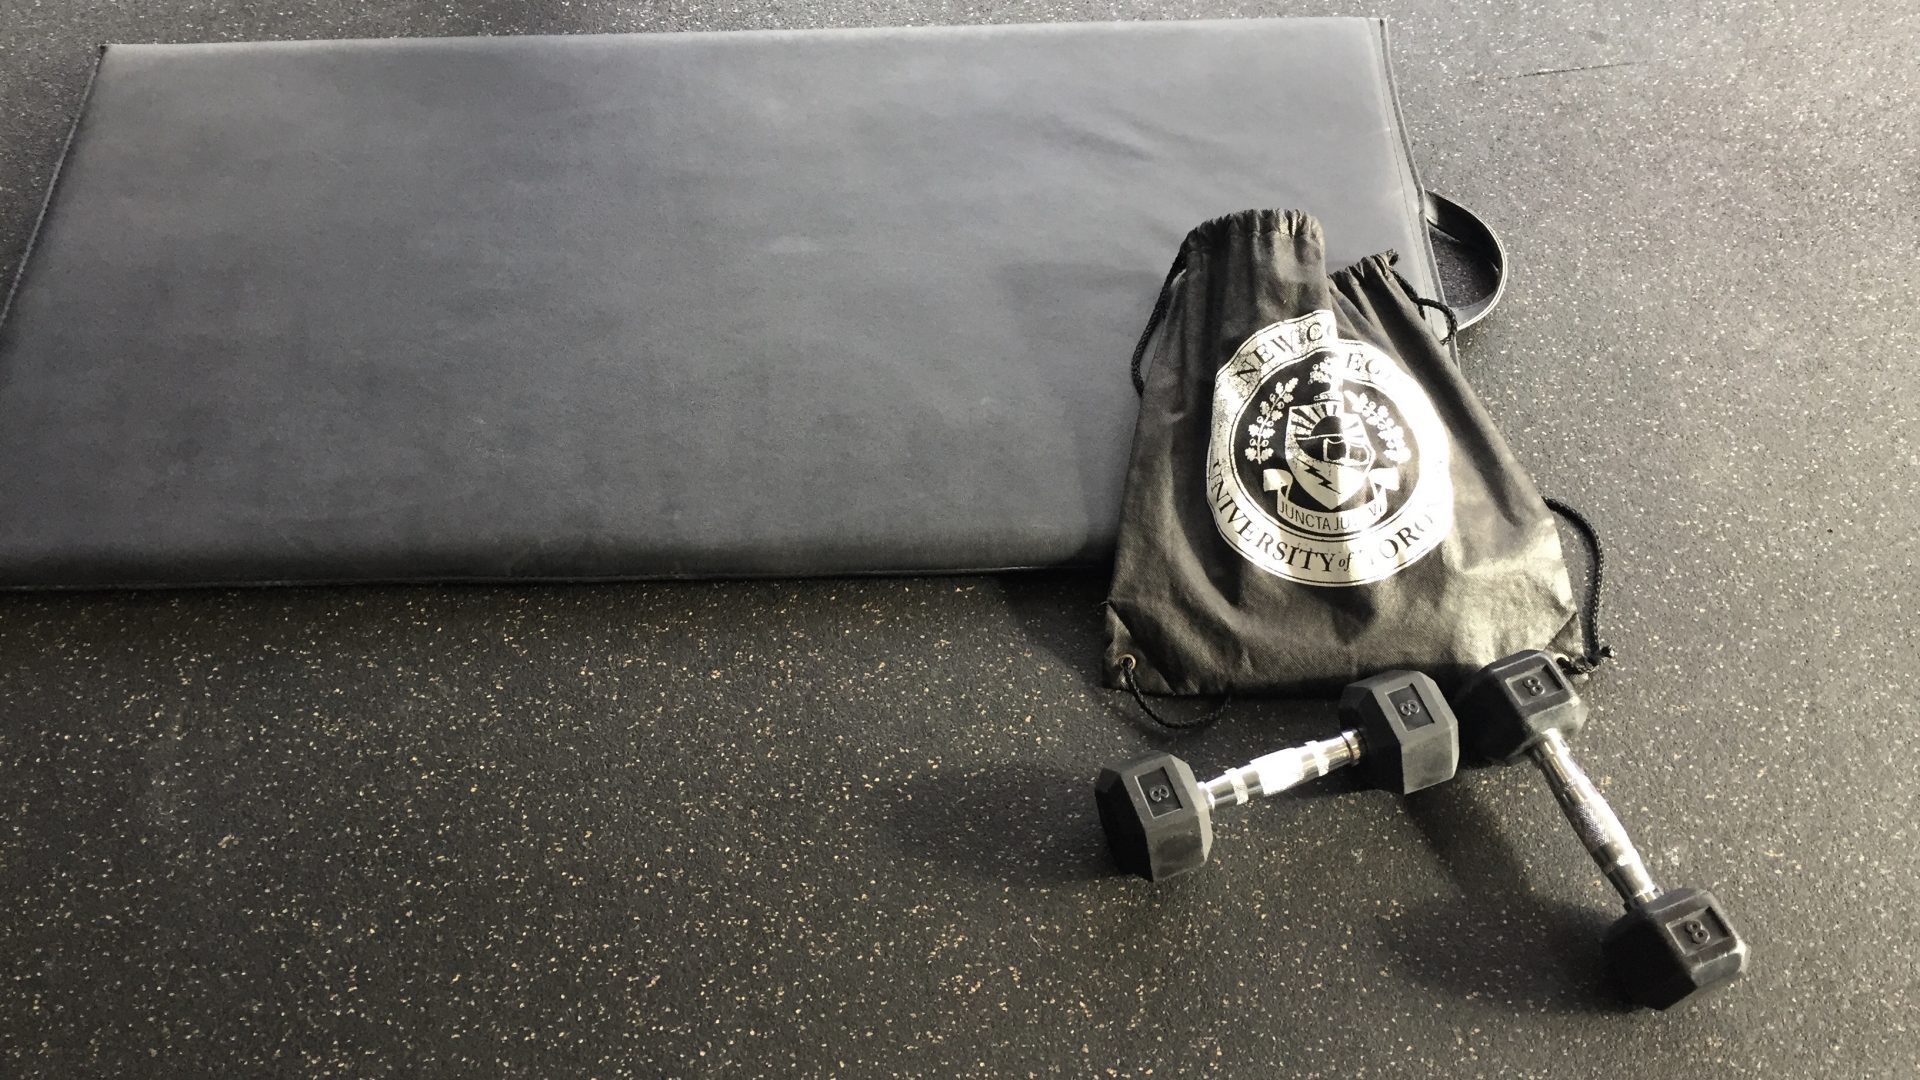 Workout mat, dumbbells, and gym bag